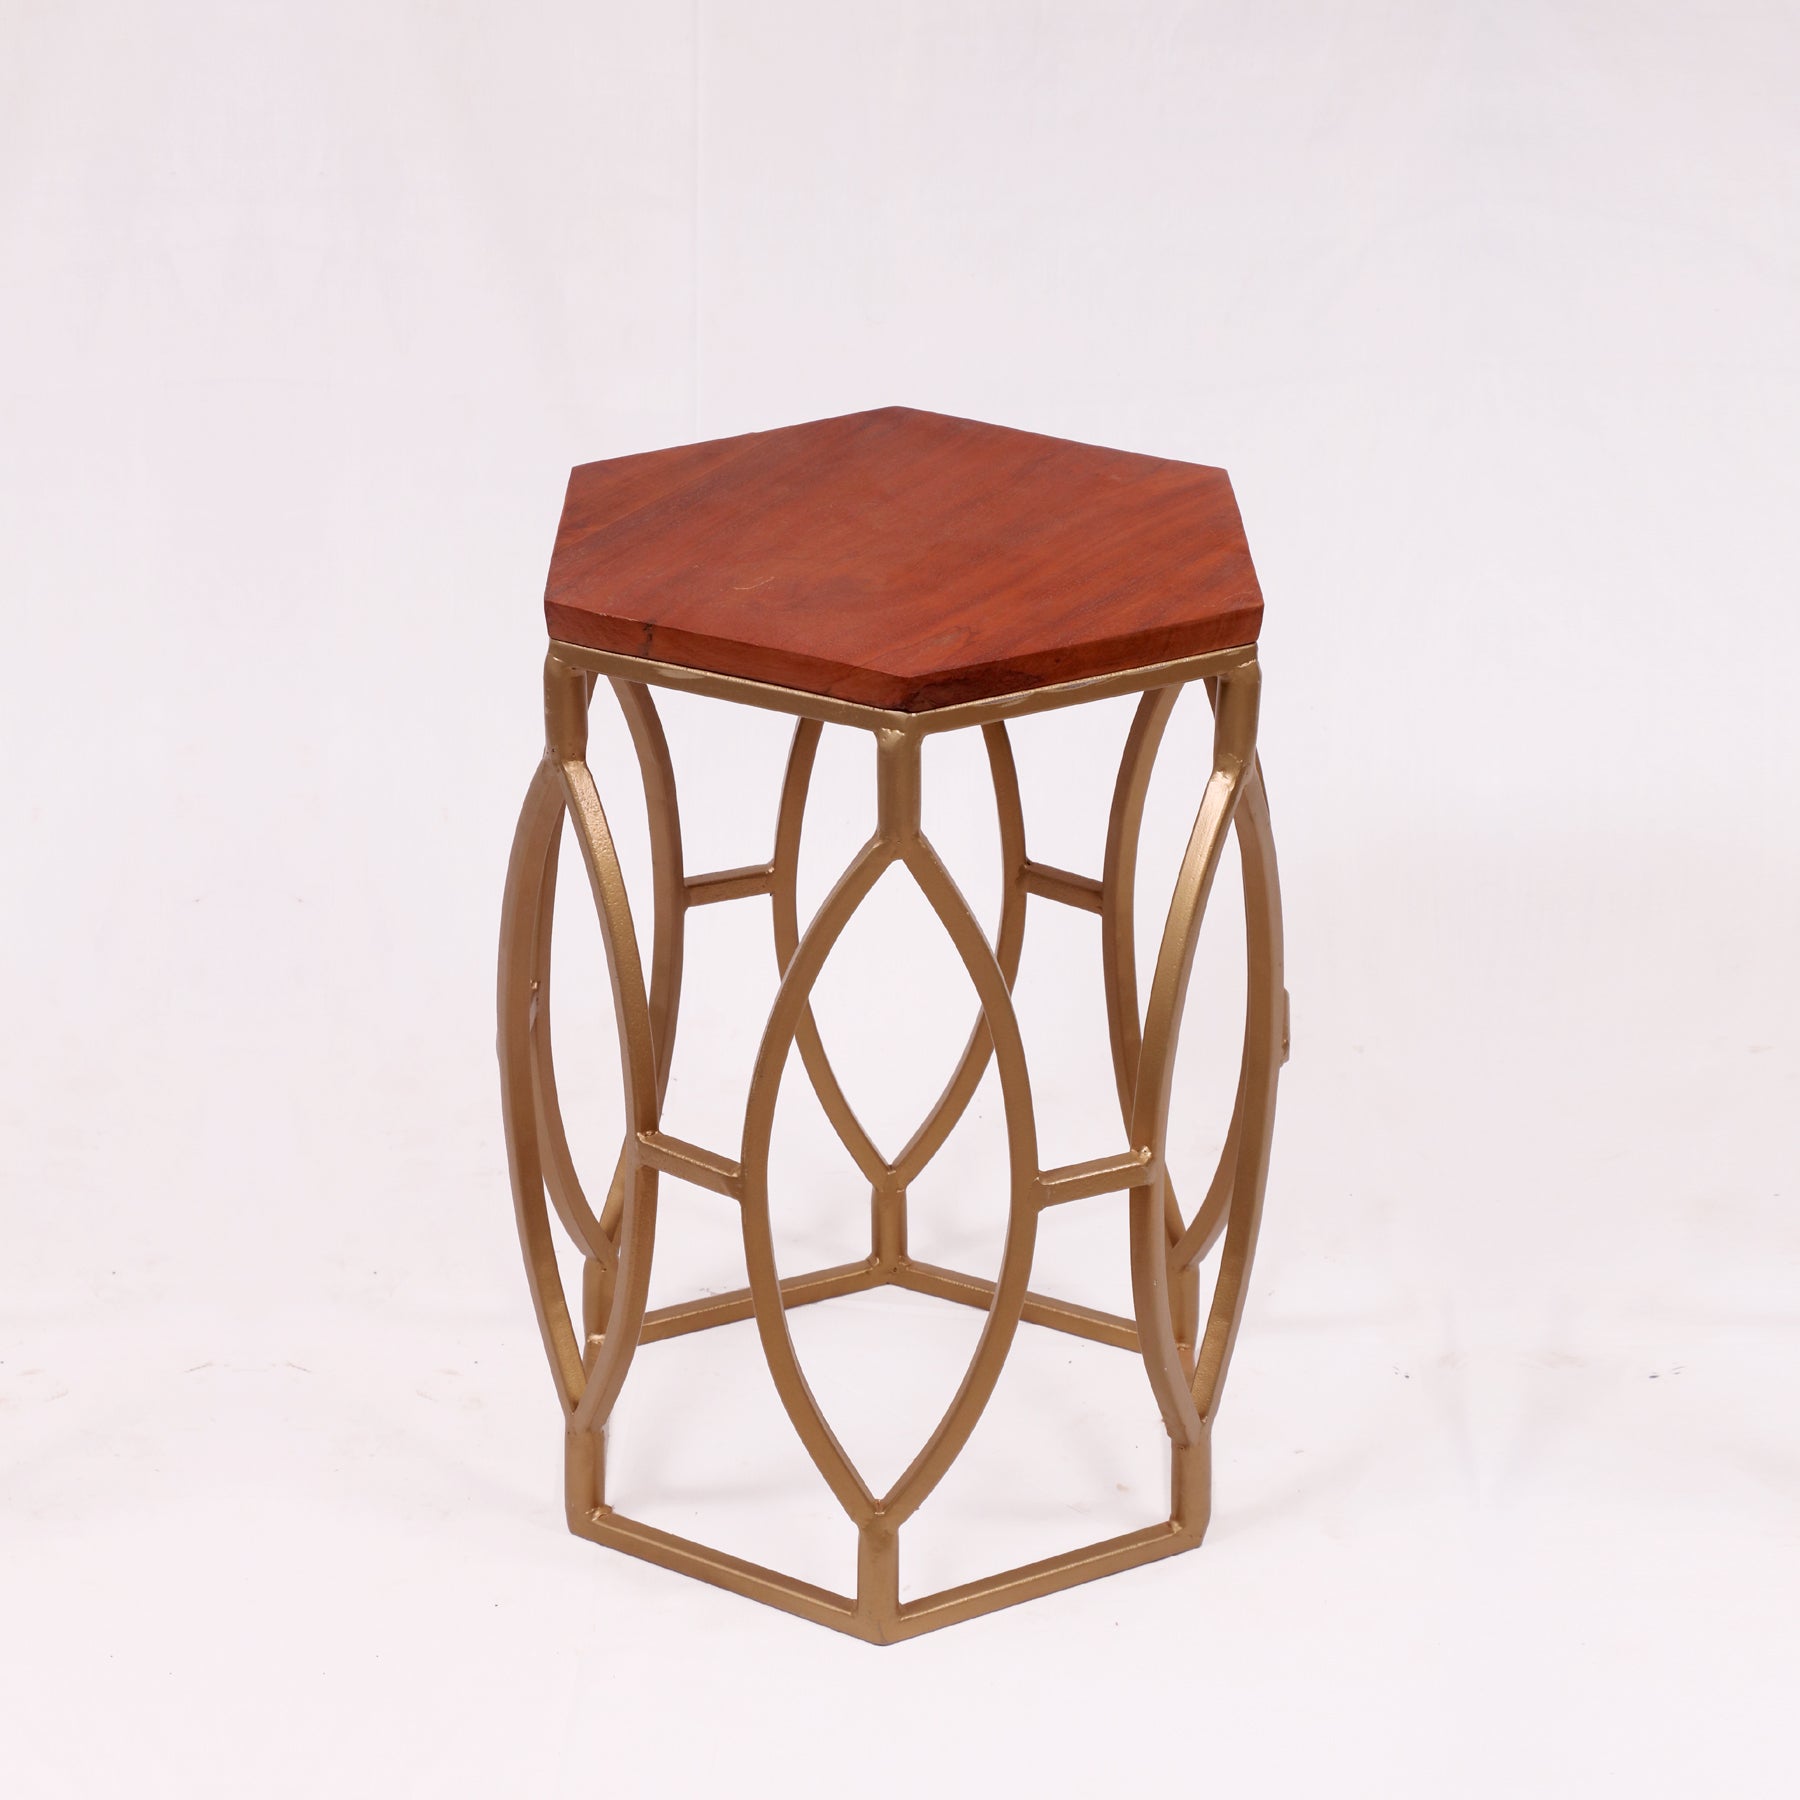 Hexagonal Metallic Coffee Table (Golden) End Table